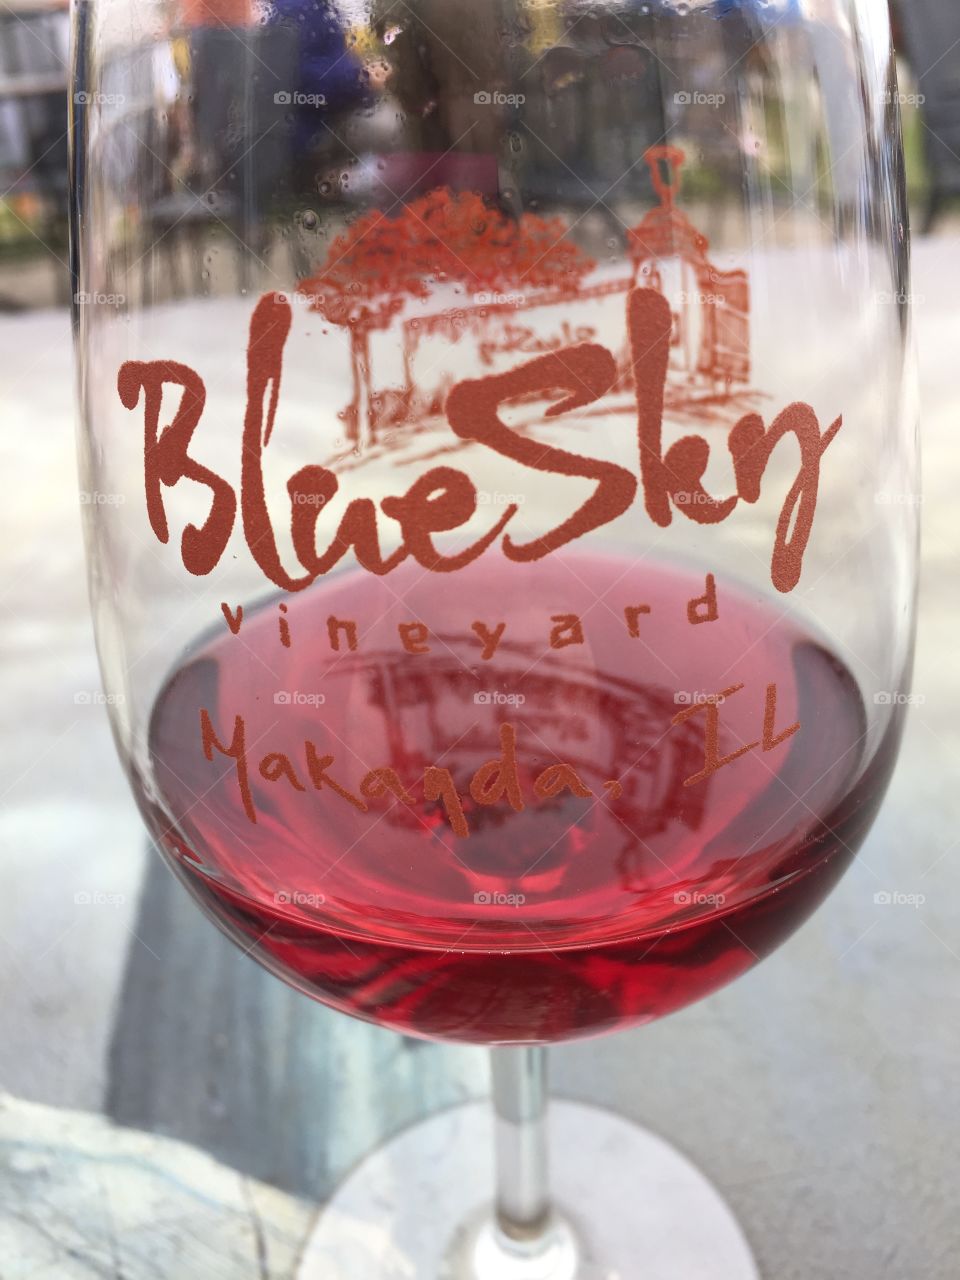 Blue Sky vineyard